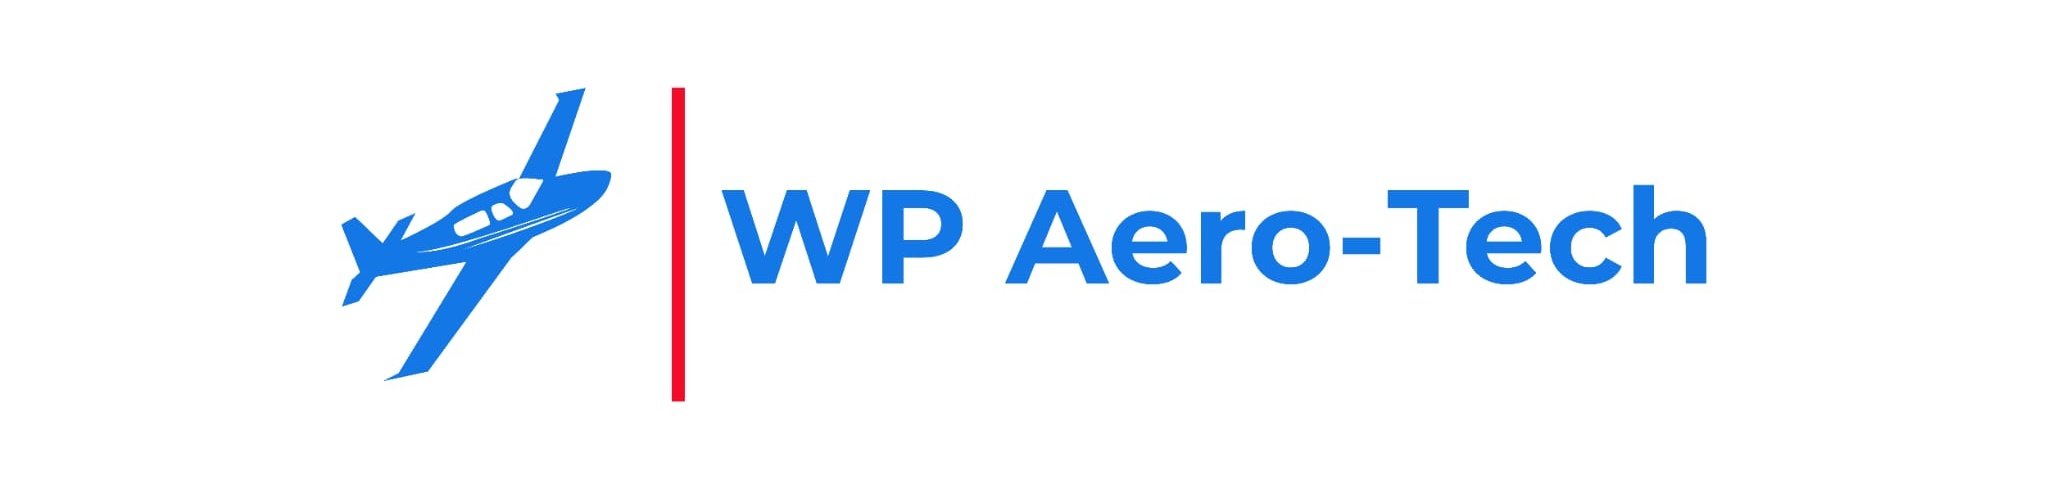 WP Aero-Tech